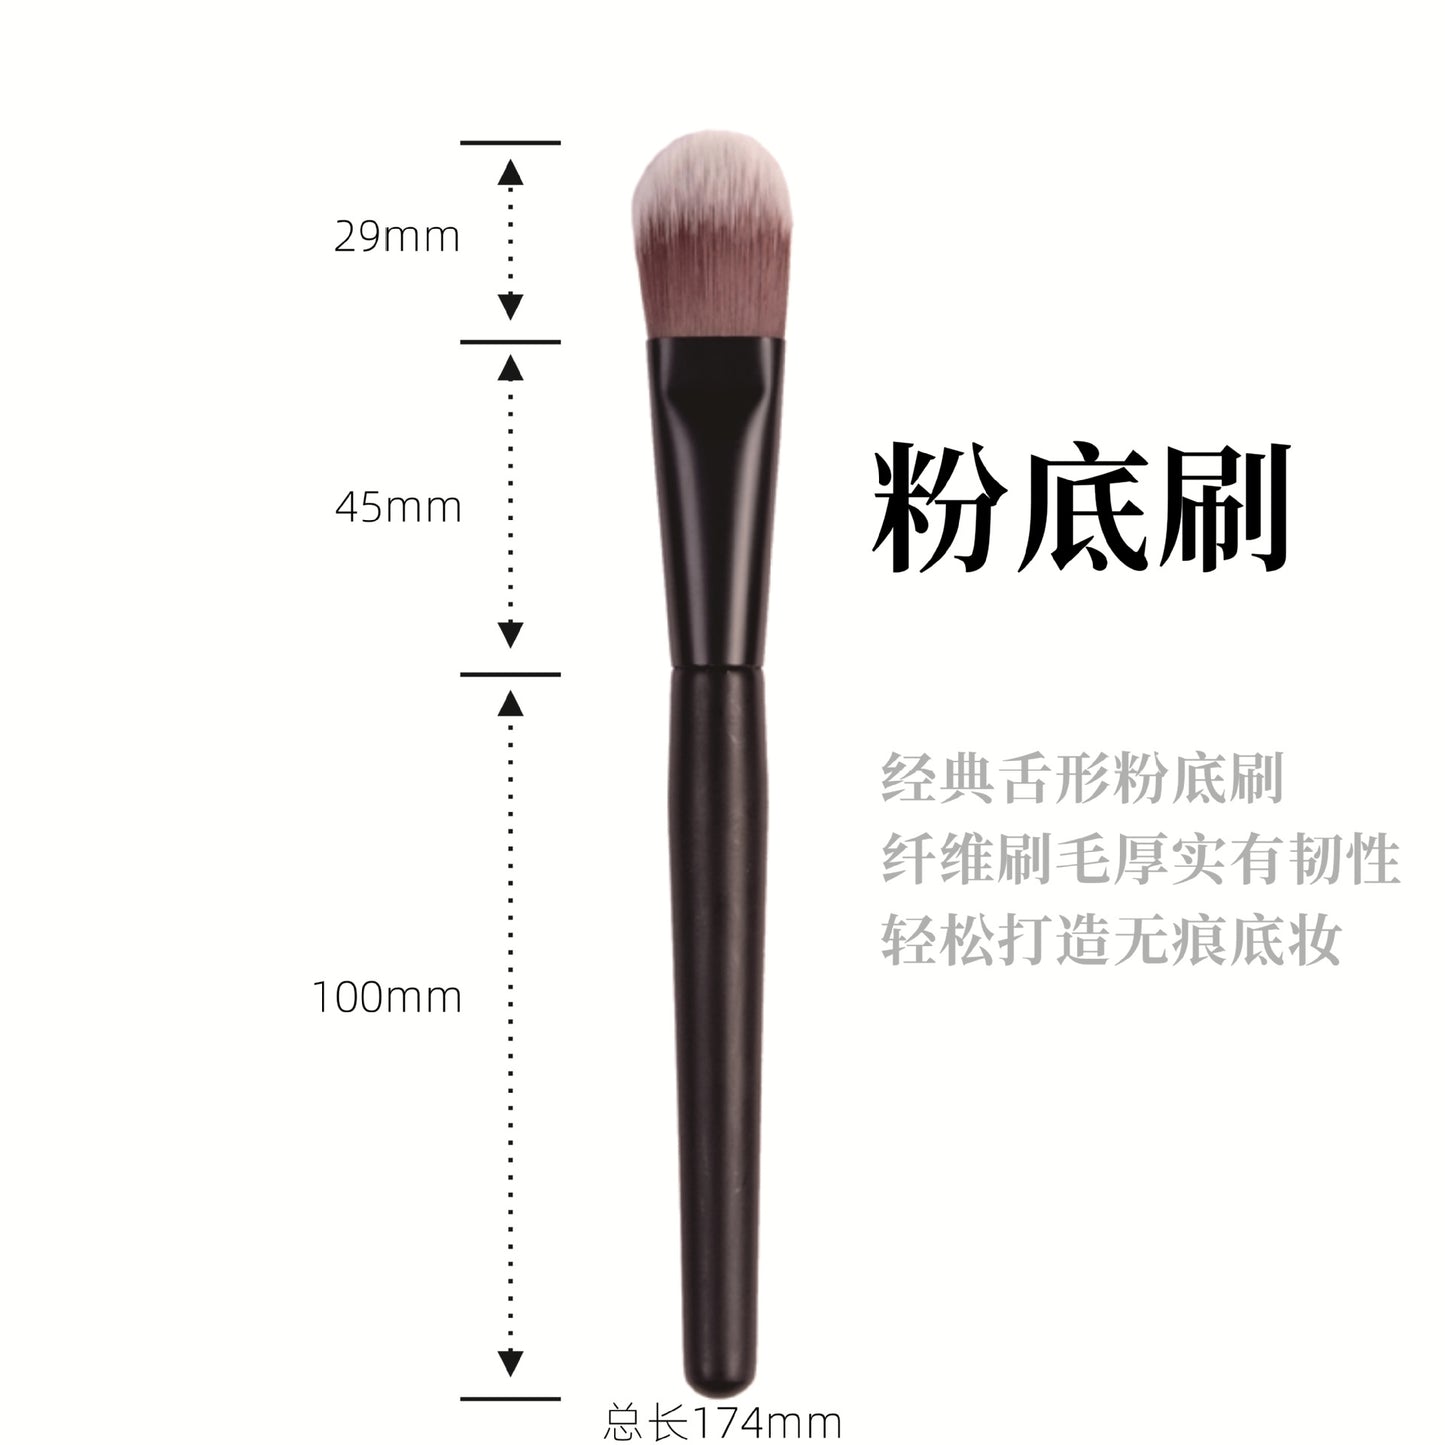 21 Sets Of Makeup Brushes Cangzhou Animal Hair Eye Shadow Powder Brush Foundation Blush Highlight Concealer Wooden Handle Beauty Brush